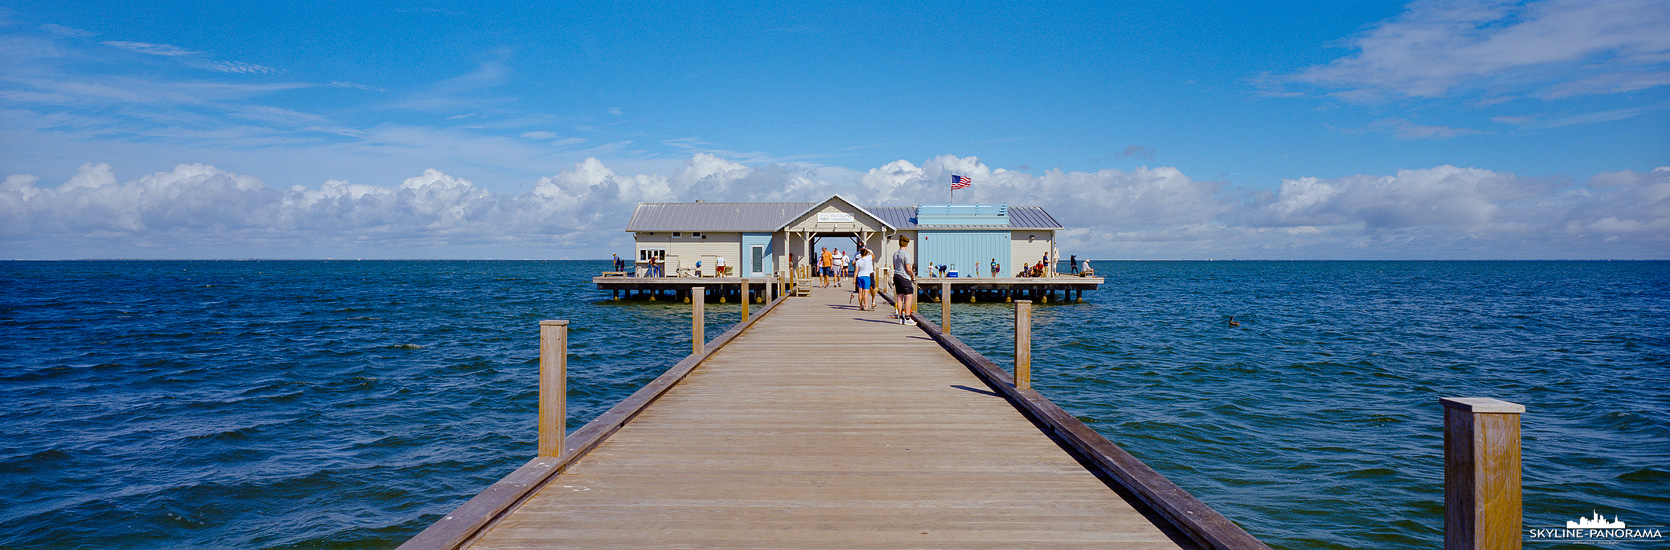 Anna Maria Island City Pier - AMI Florida (p_01242)